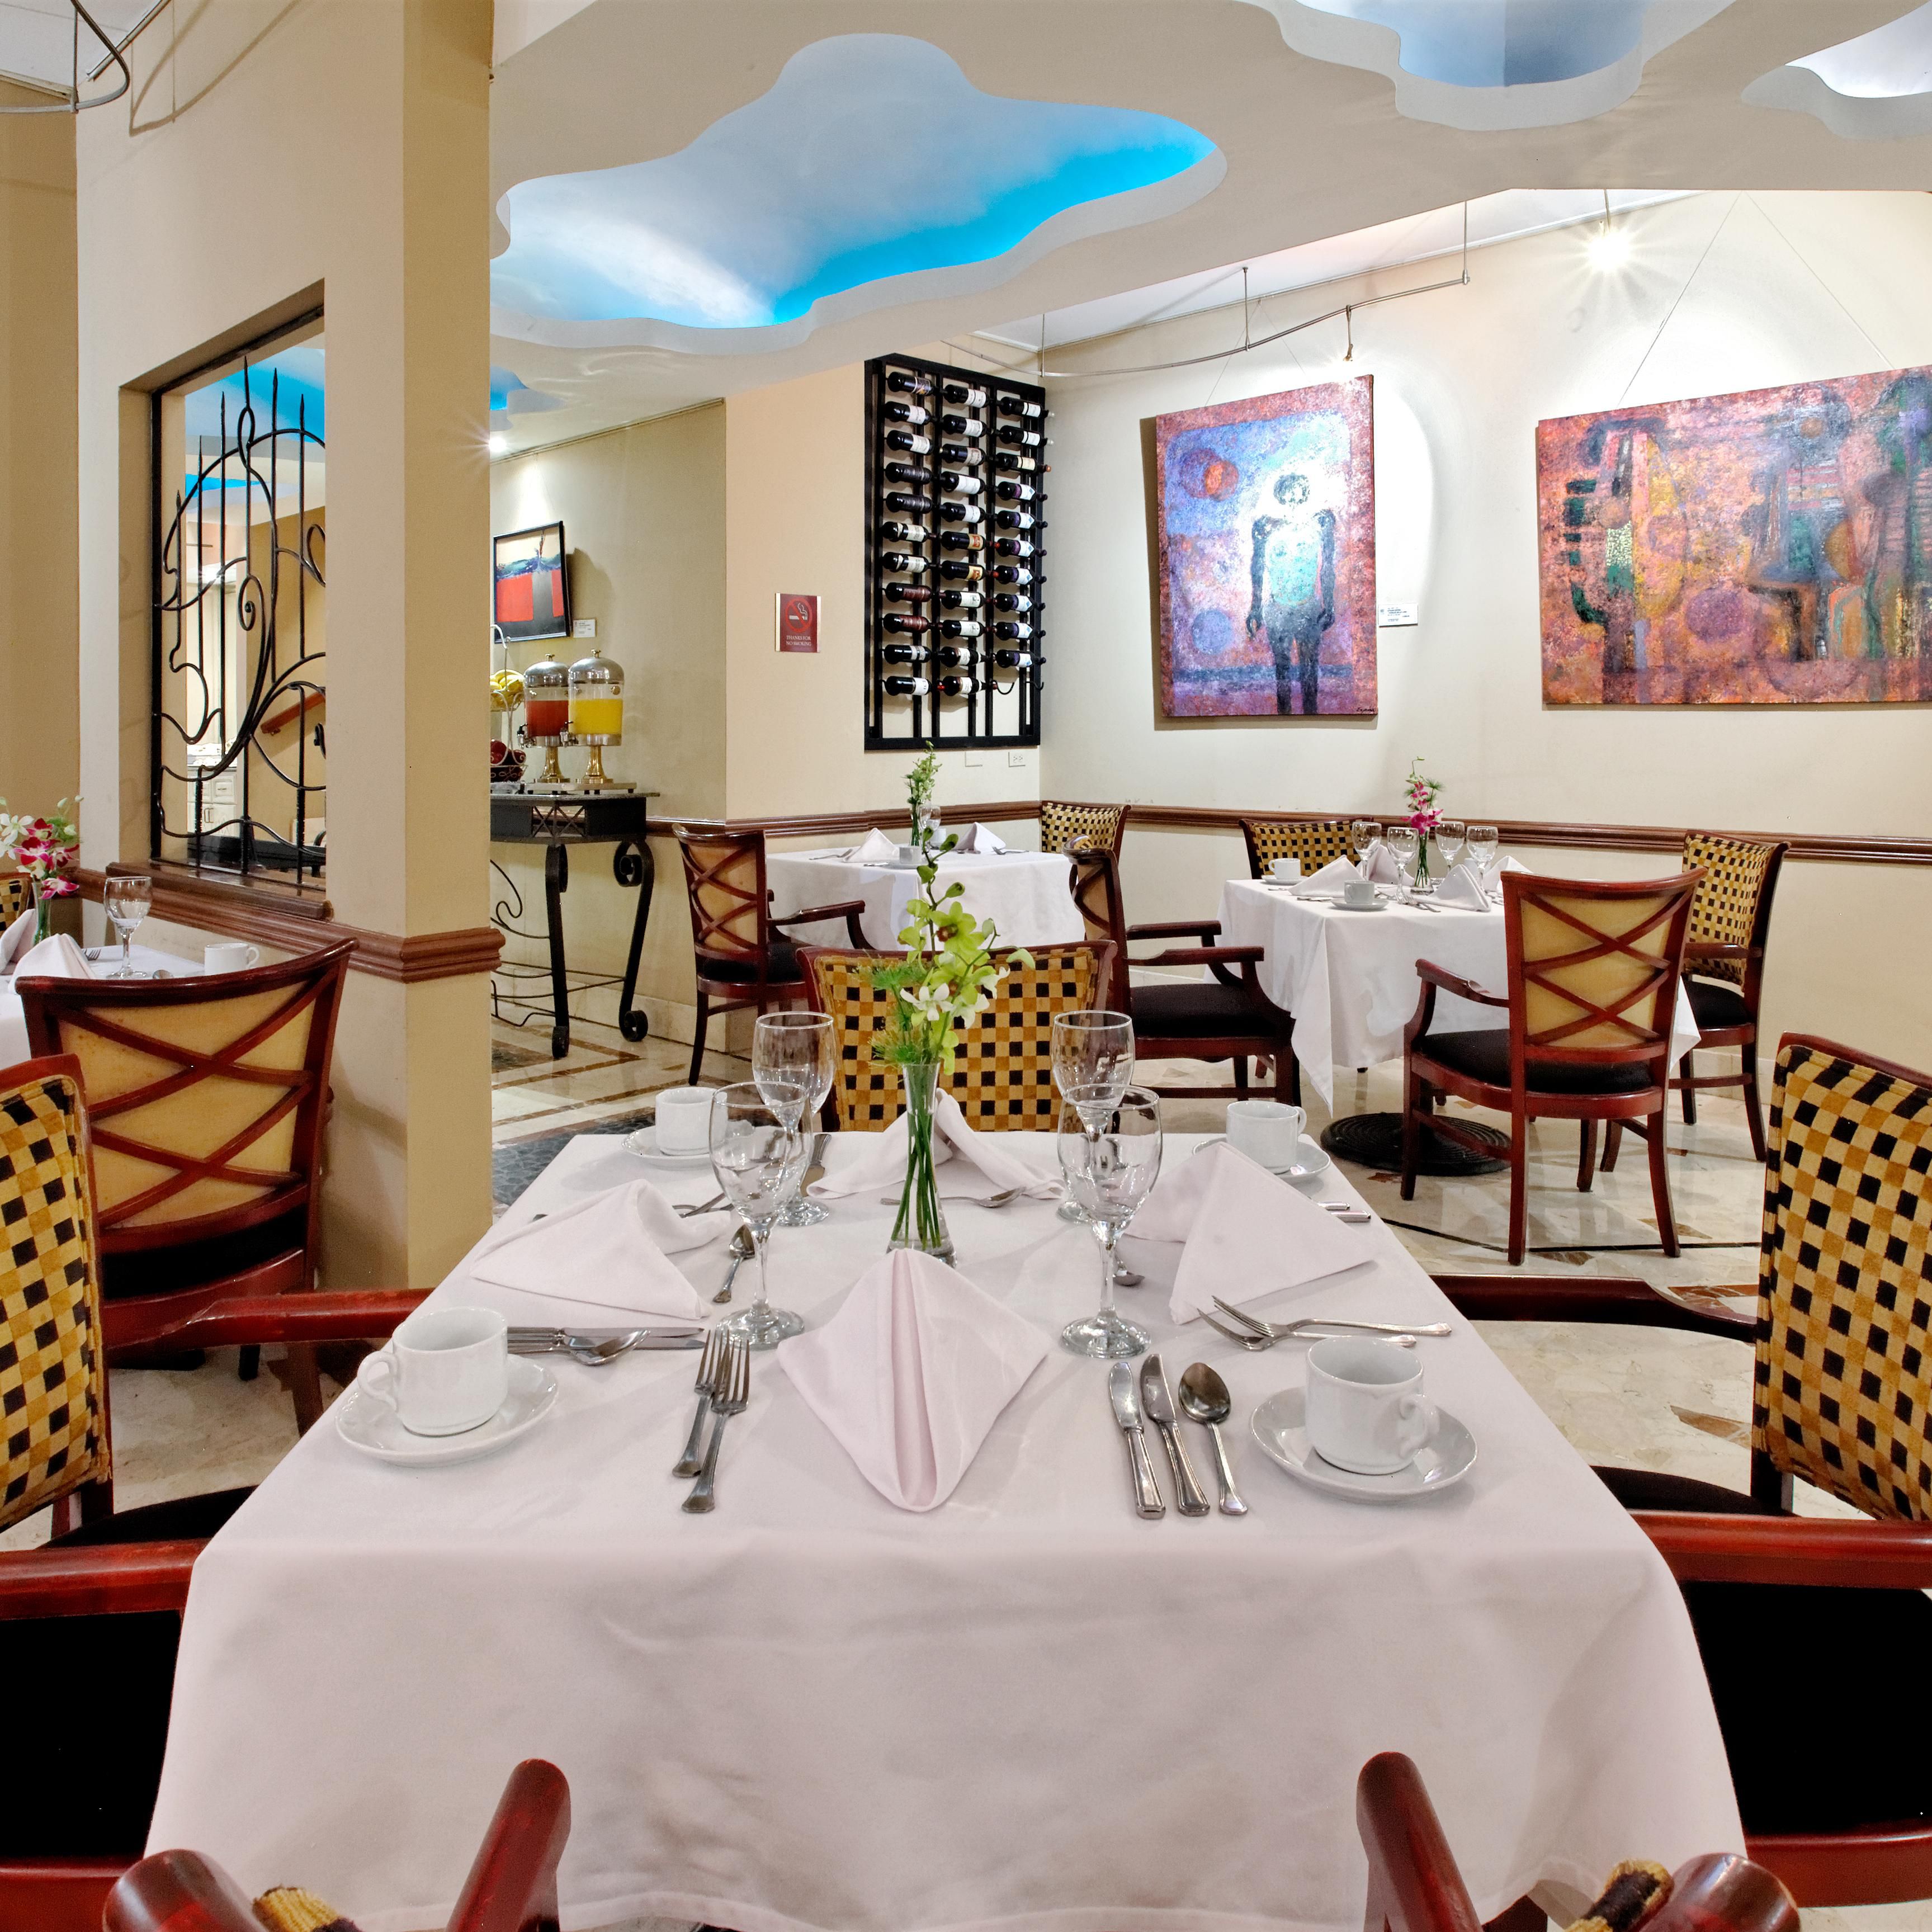 Restaurant La Galeria at the Crowne Plaza Panama Hotel